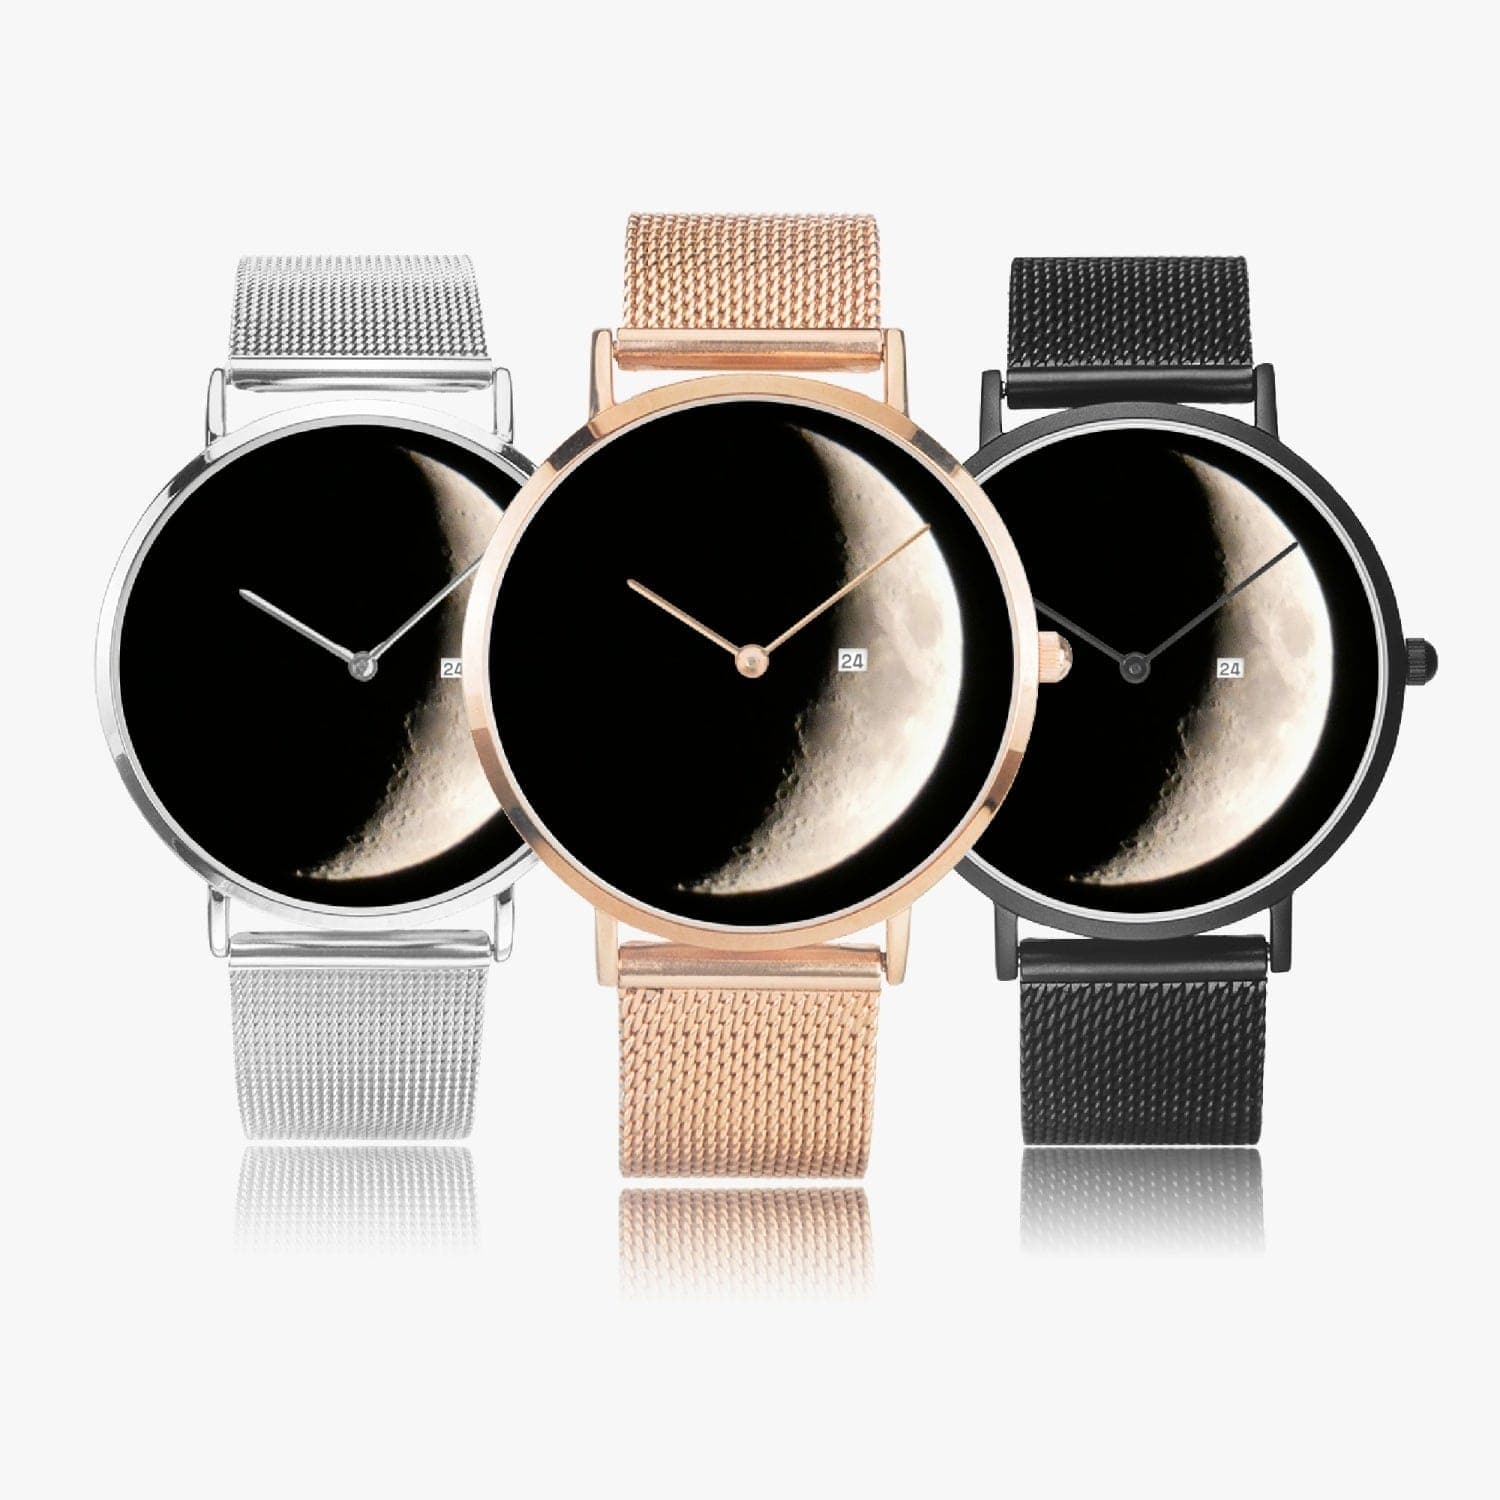 New moon. Stainless Steel Perpetual Calendar Quartz Watch.  Designer watch by Sensus Studio Design